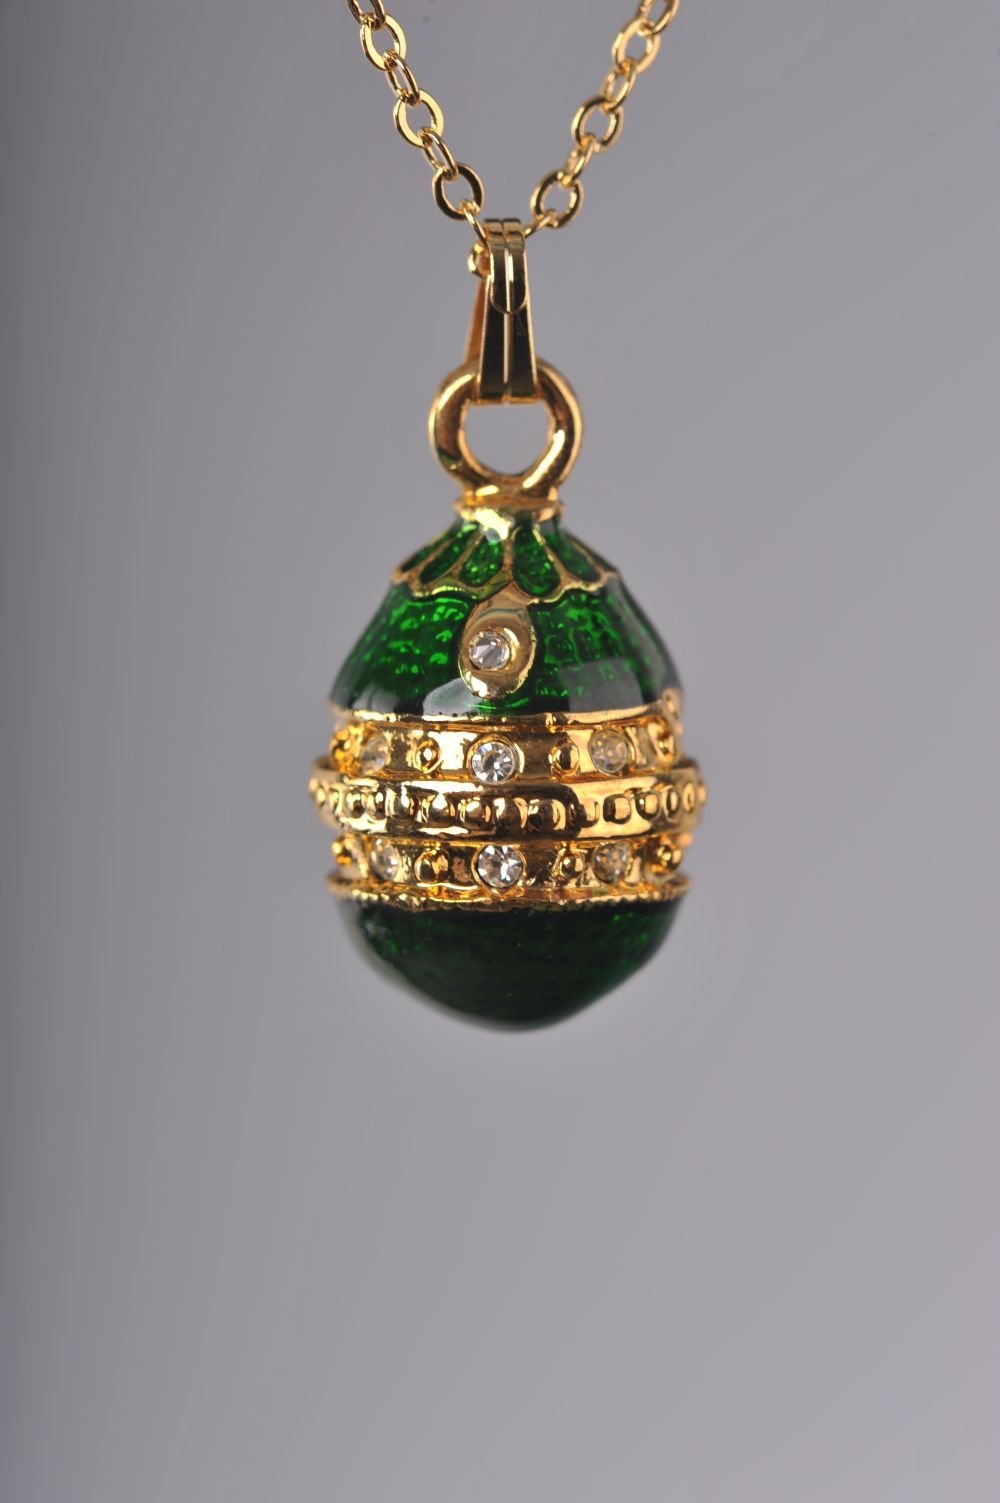 Keren Kopal Green & Gold Egg Pendant Locket Necklace  37.00